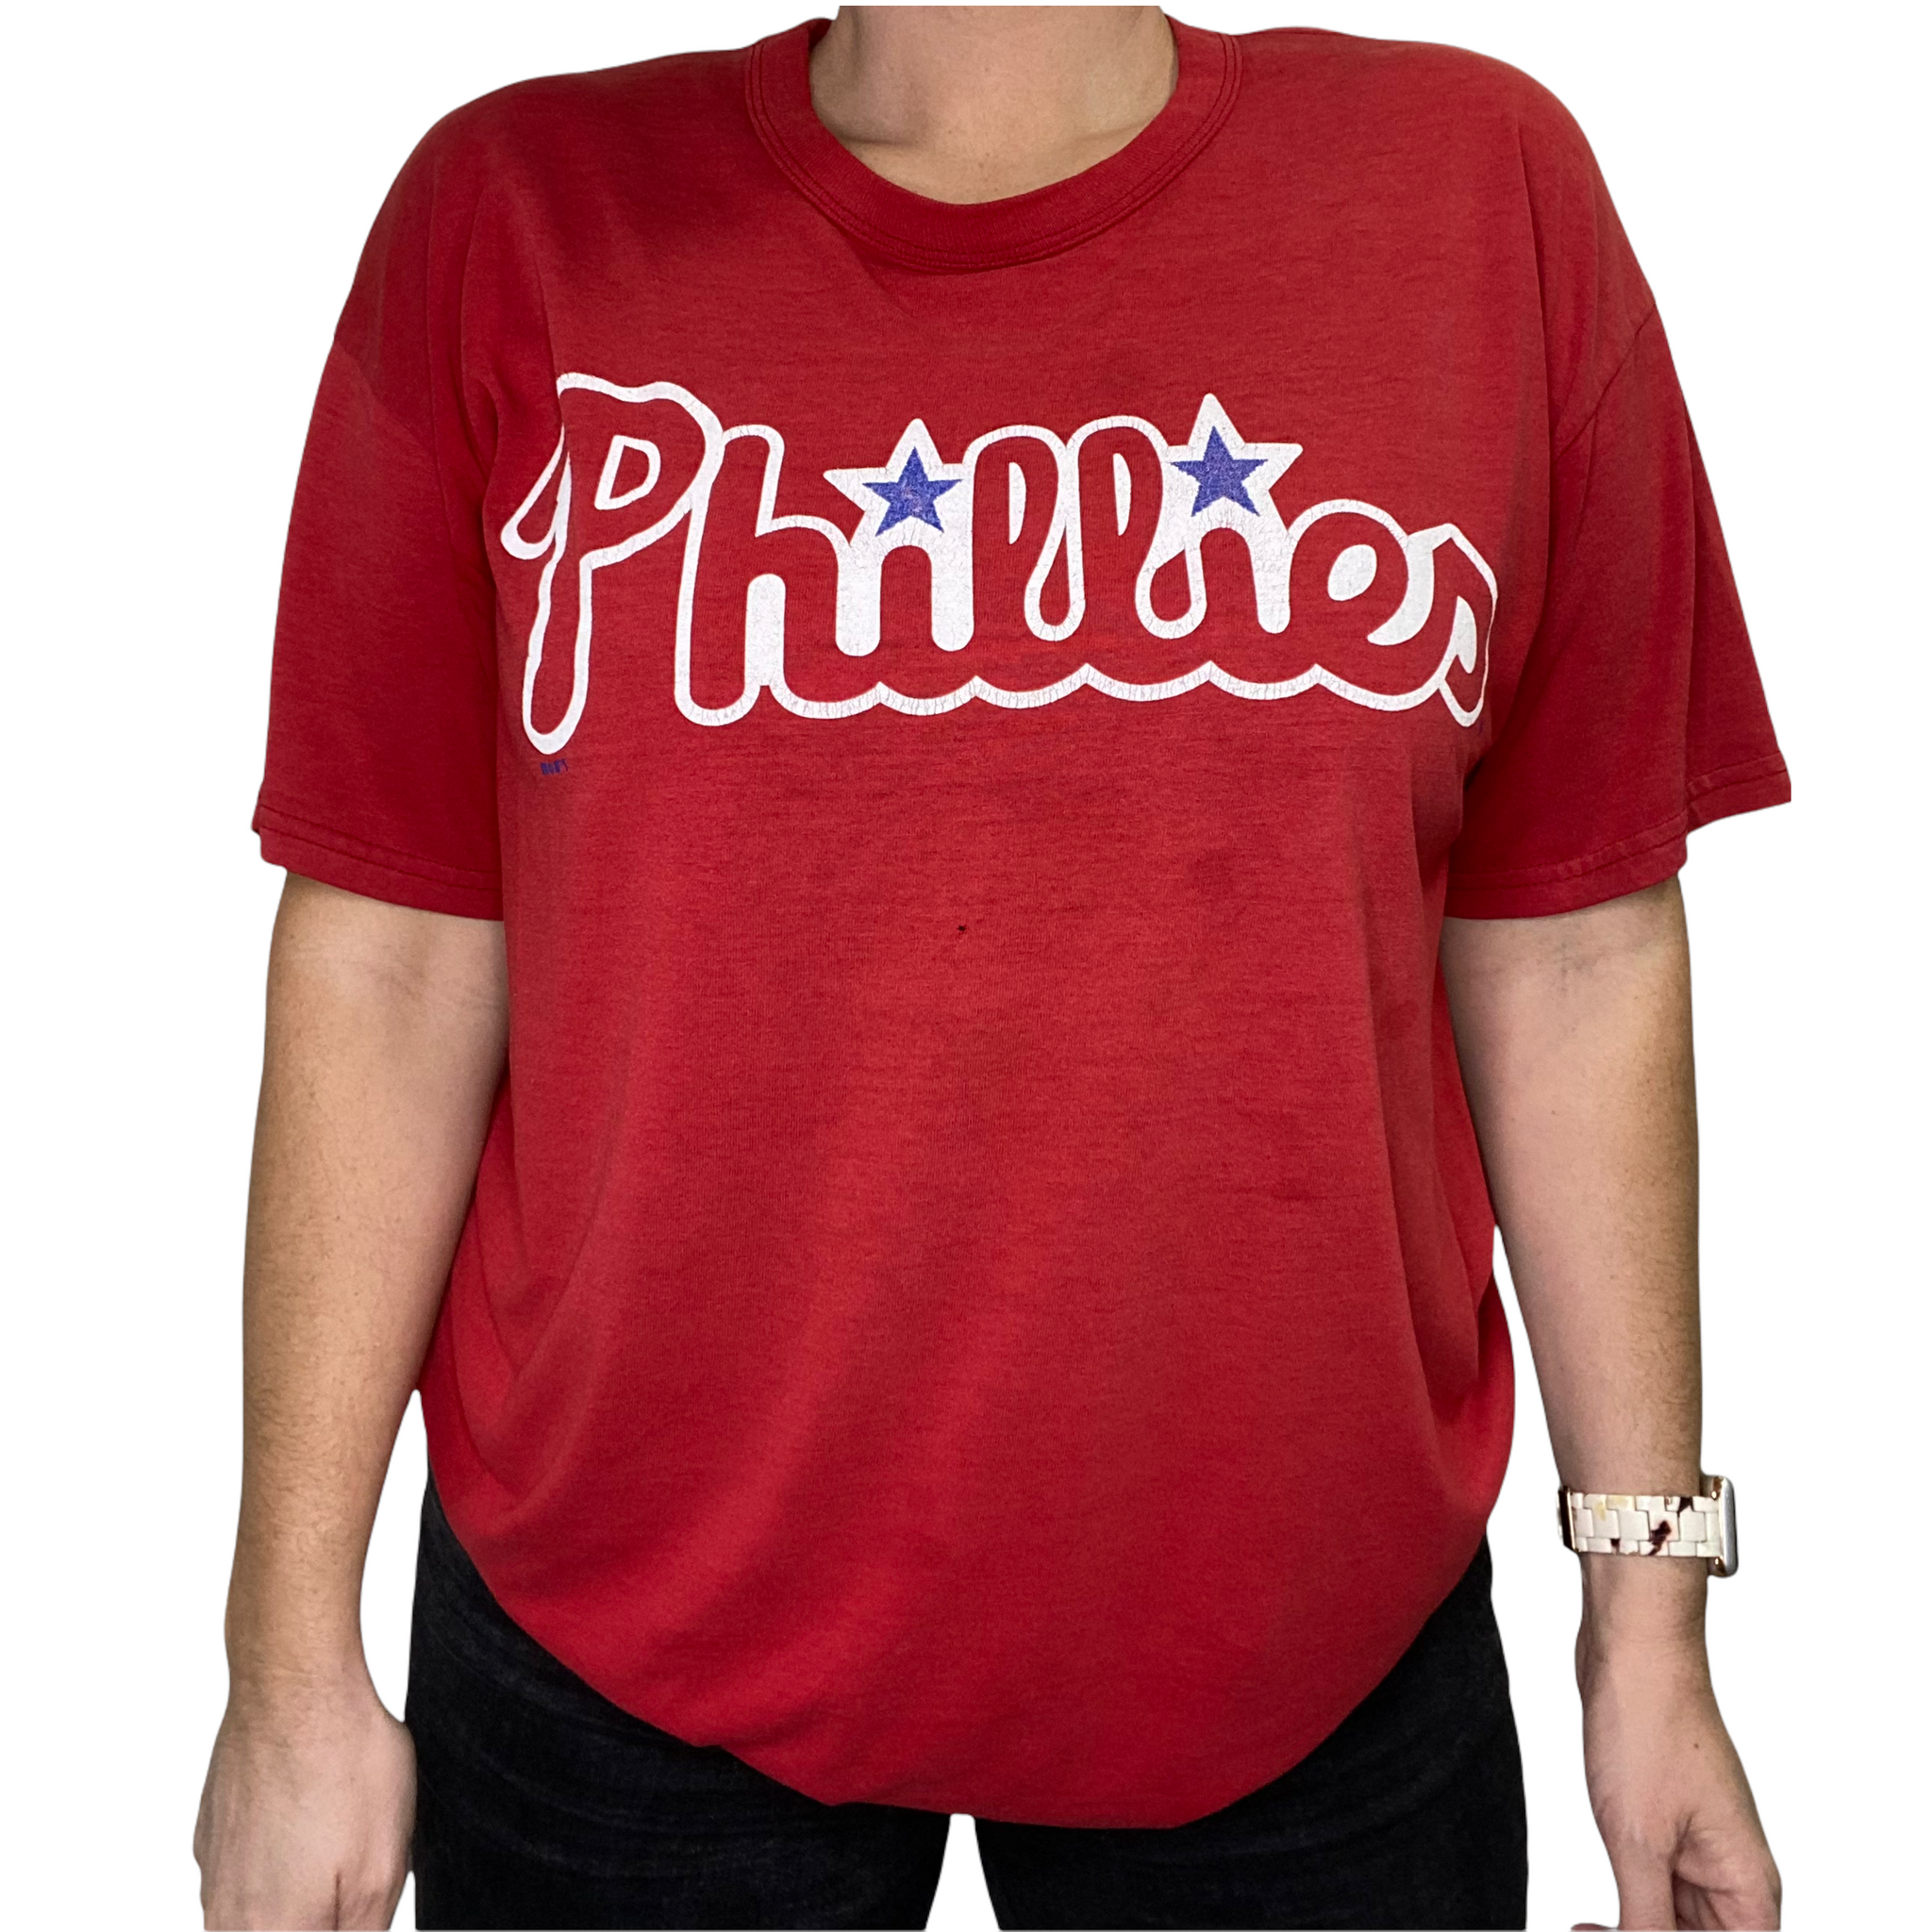  Majestic Philadelphia Phillies T-Shirt (Youth Small